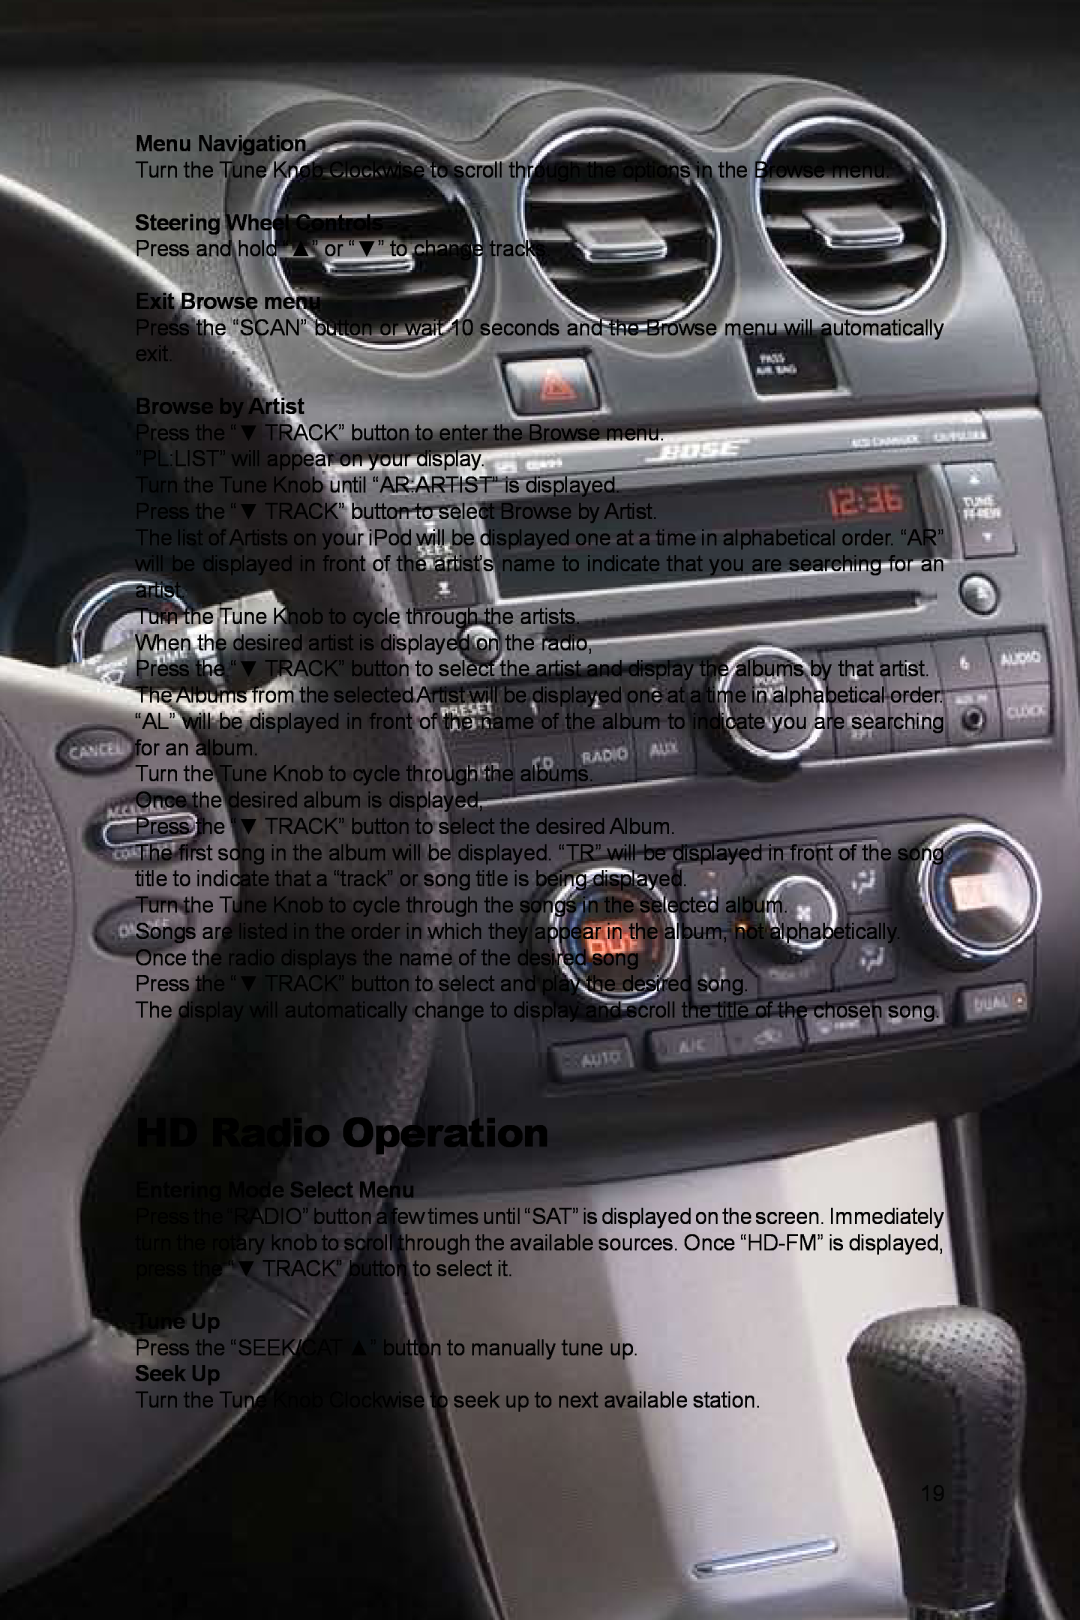 Peripheral Electronics PGHNI2 HD Radio Operation, Menu Navigation, Steering Wheel Controls, Exit Browse menu, Tune Up 